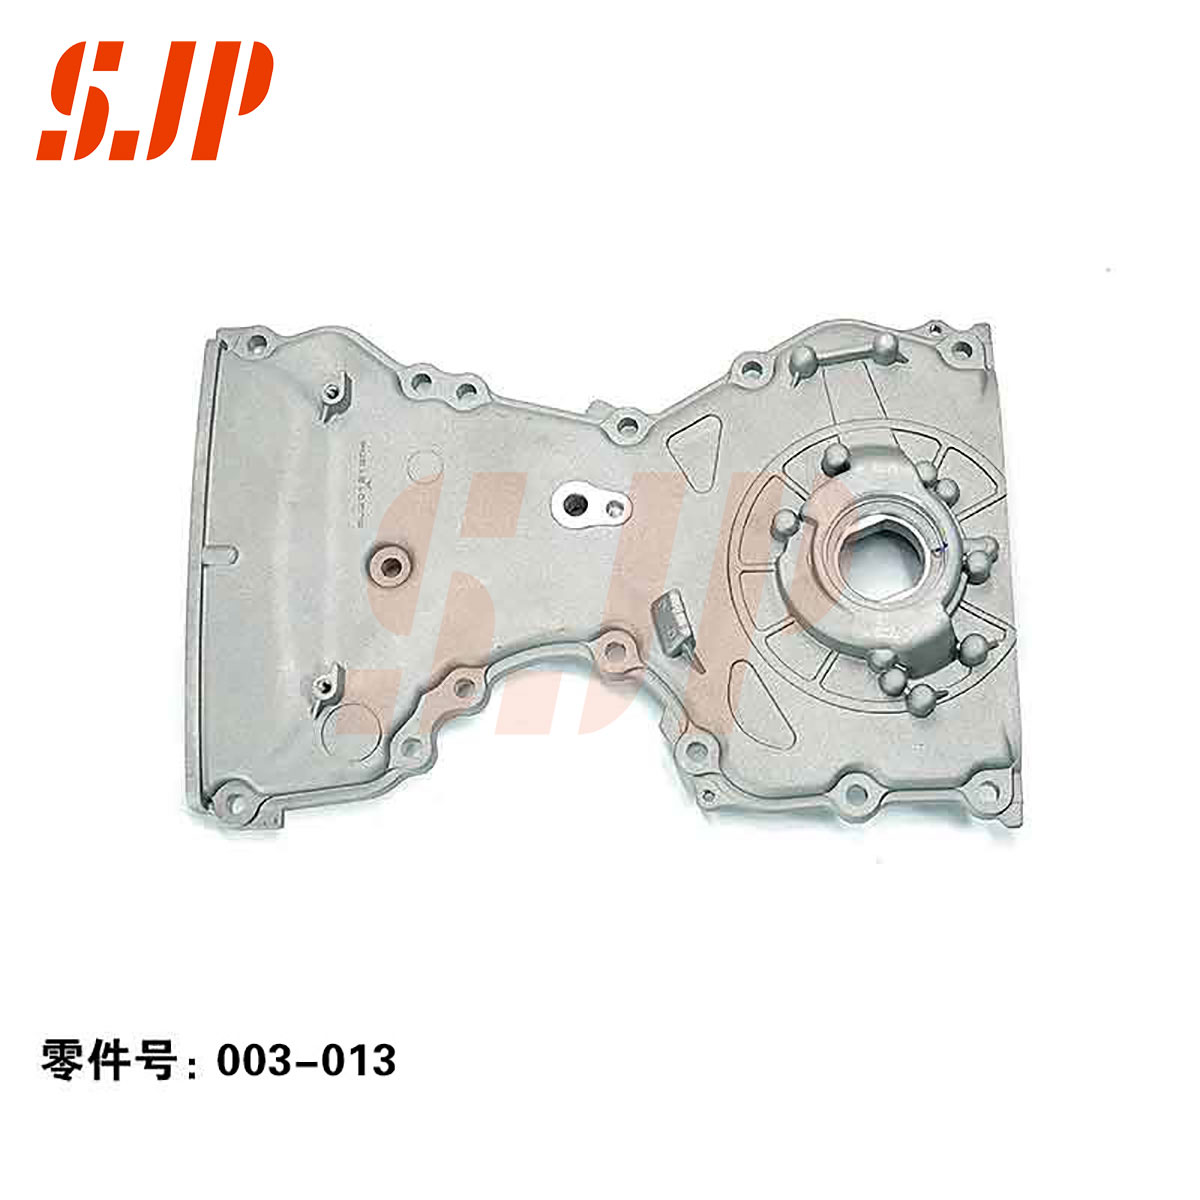 SJ-003-013 Oil Pump For DK13